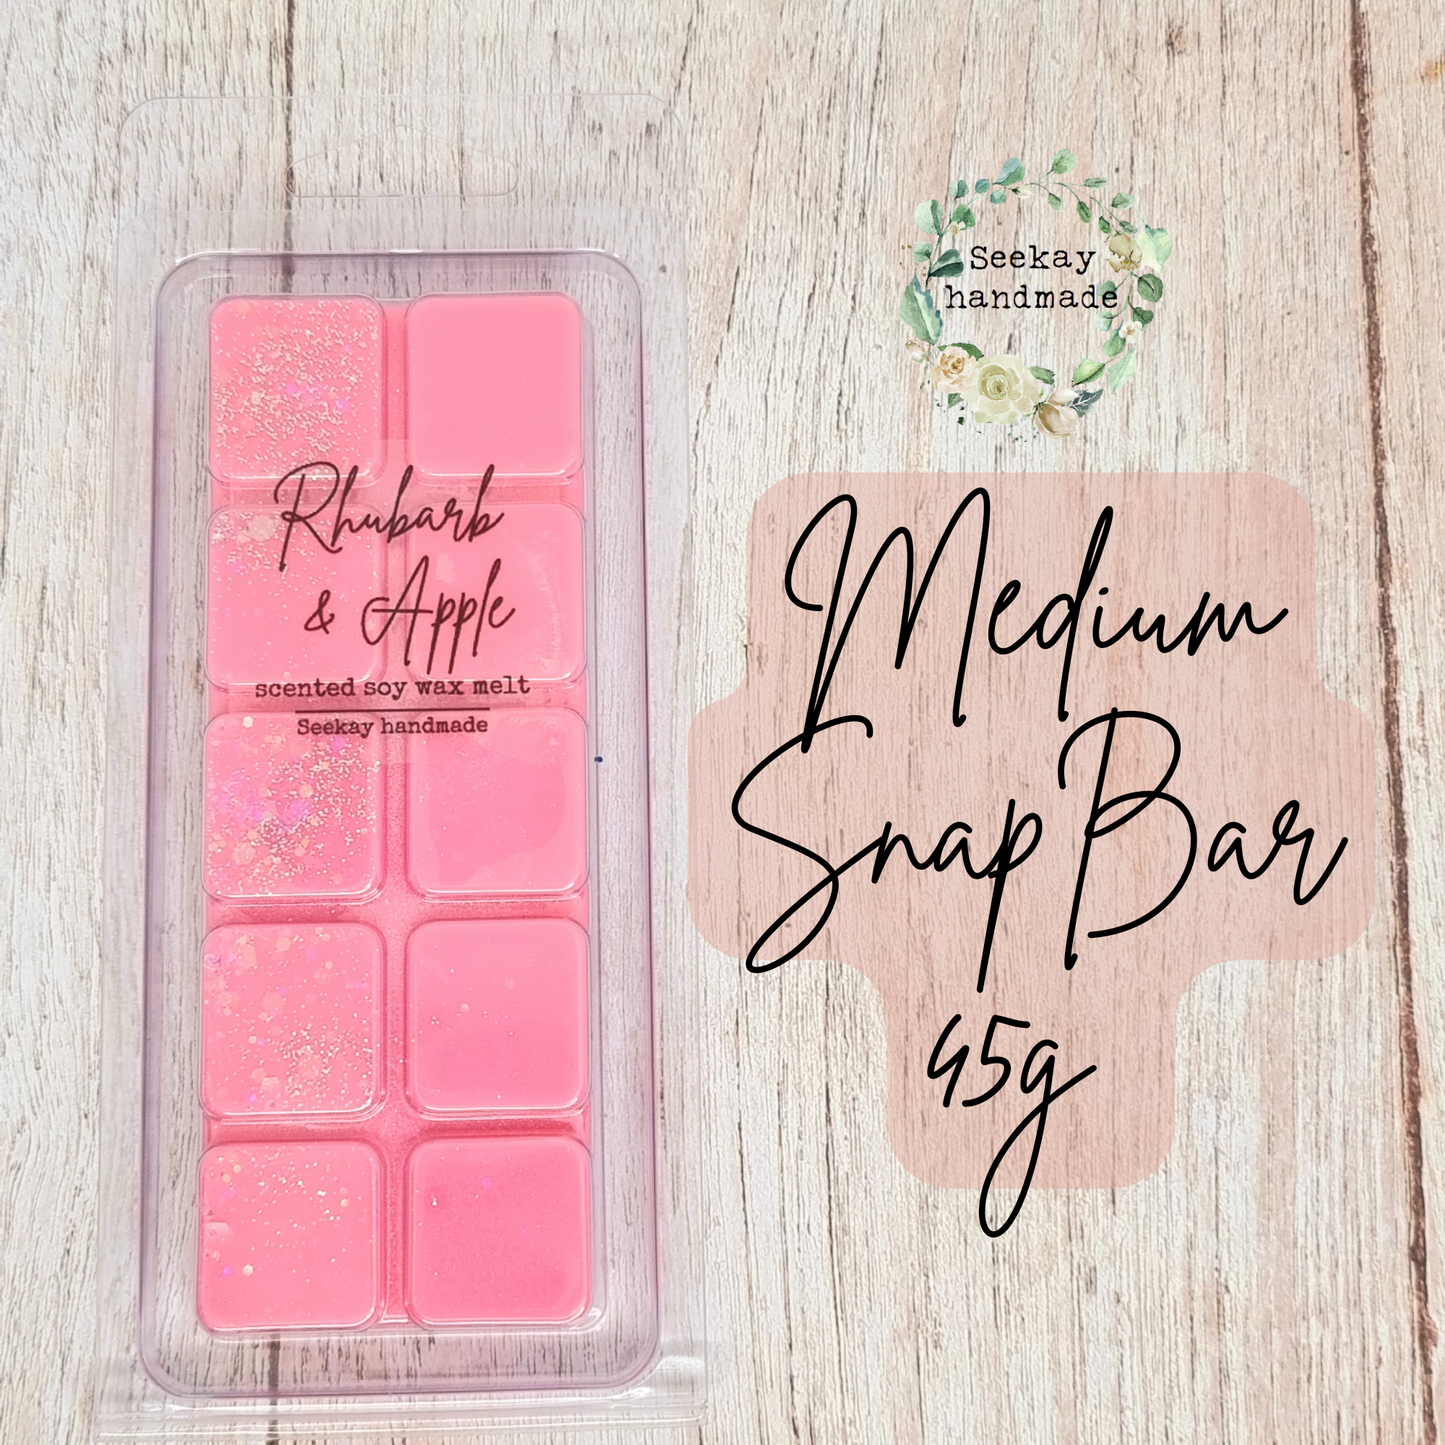 Rhubarb & Apple (Stardust) scented soy wax melt